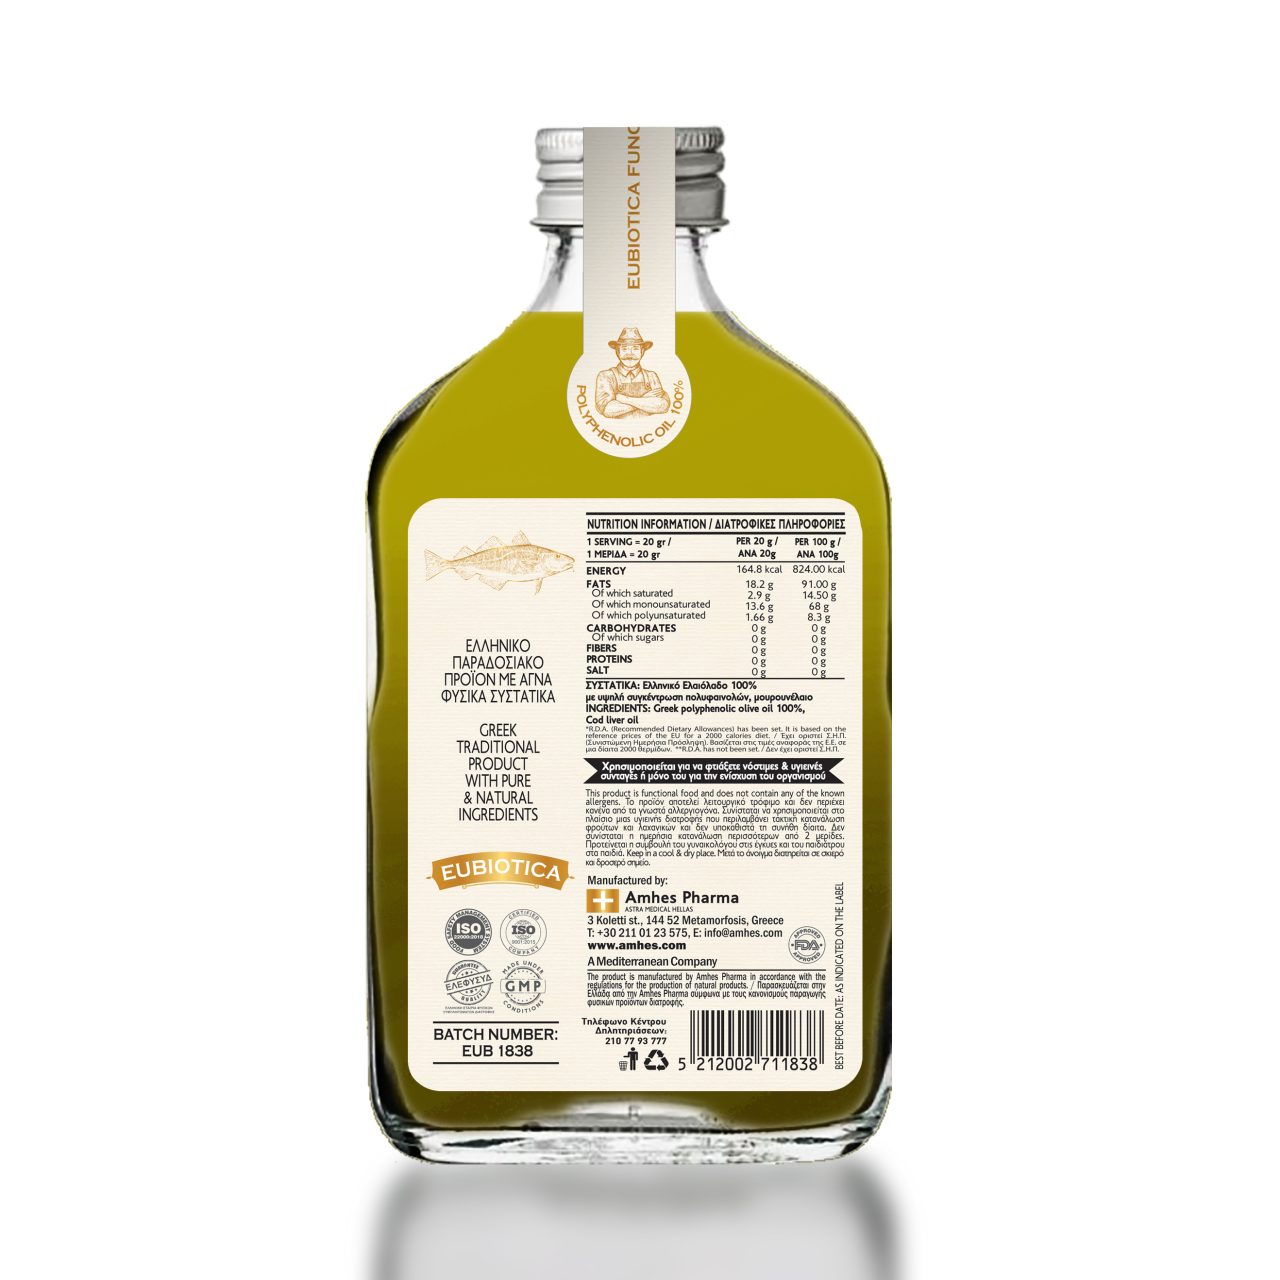 EUBIOTICA olive oil Cod Liver - Amhes Pharma - Λιποσωμιακη τεχνολογια